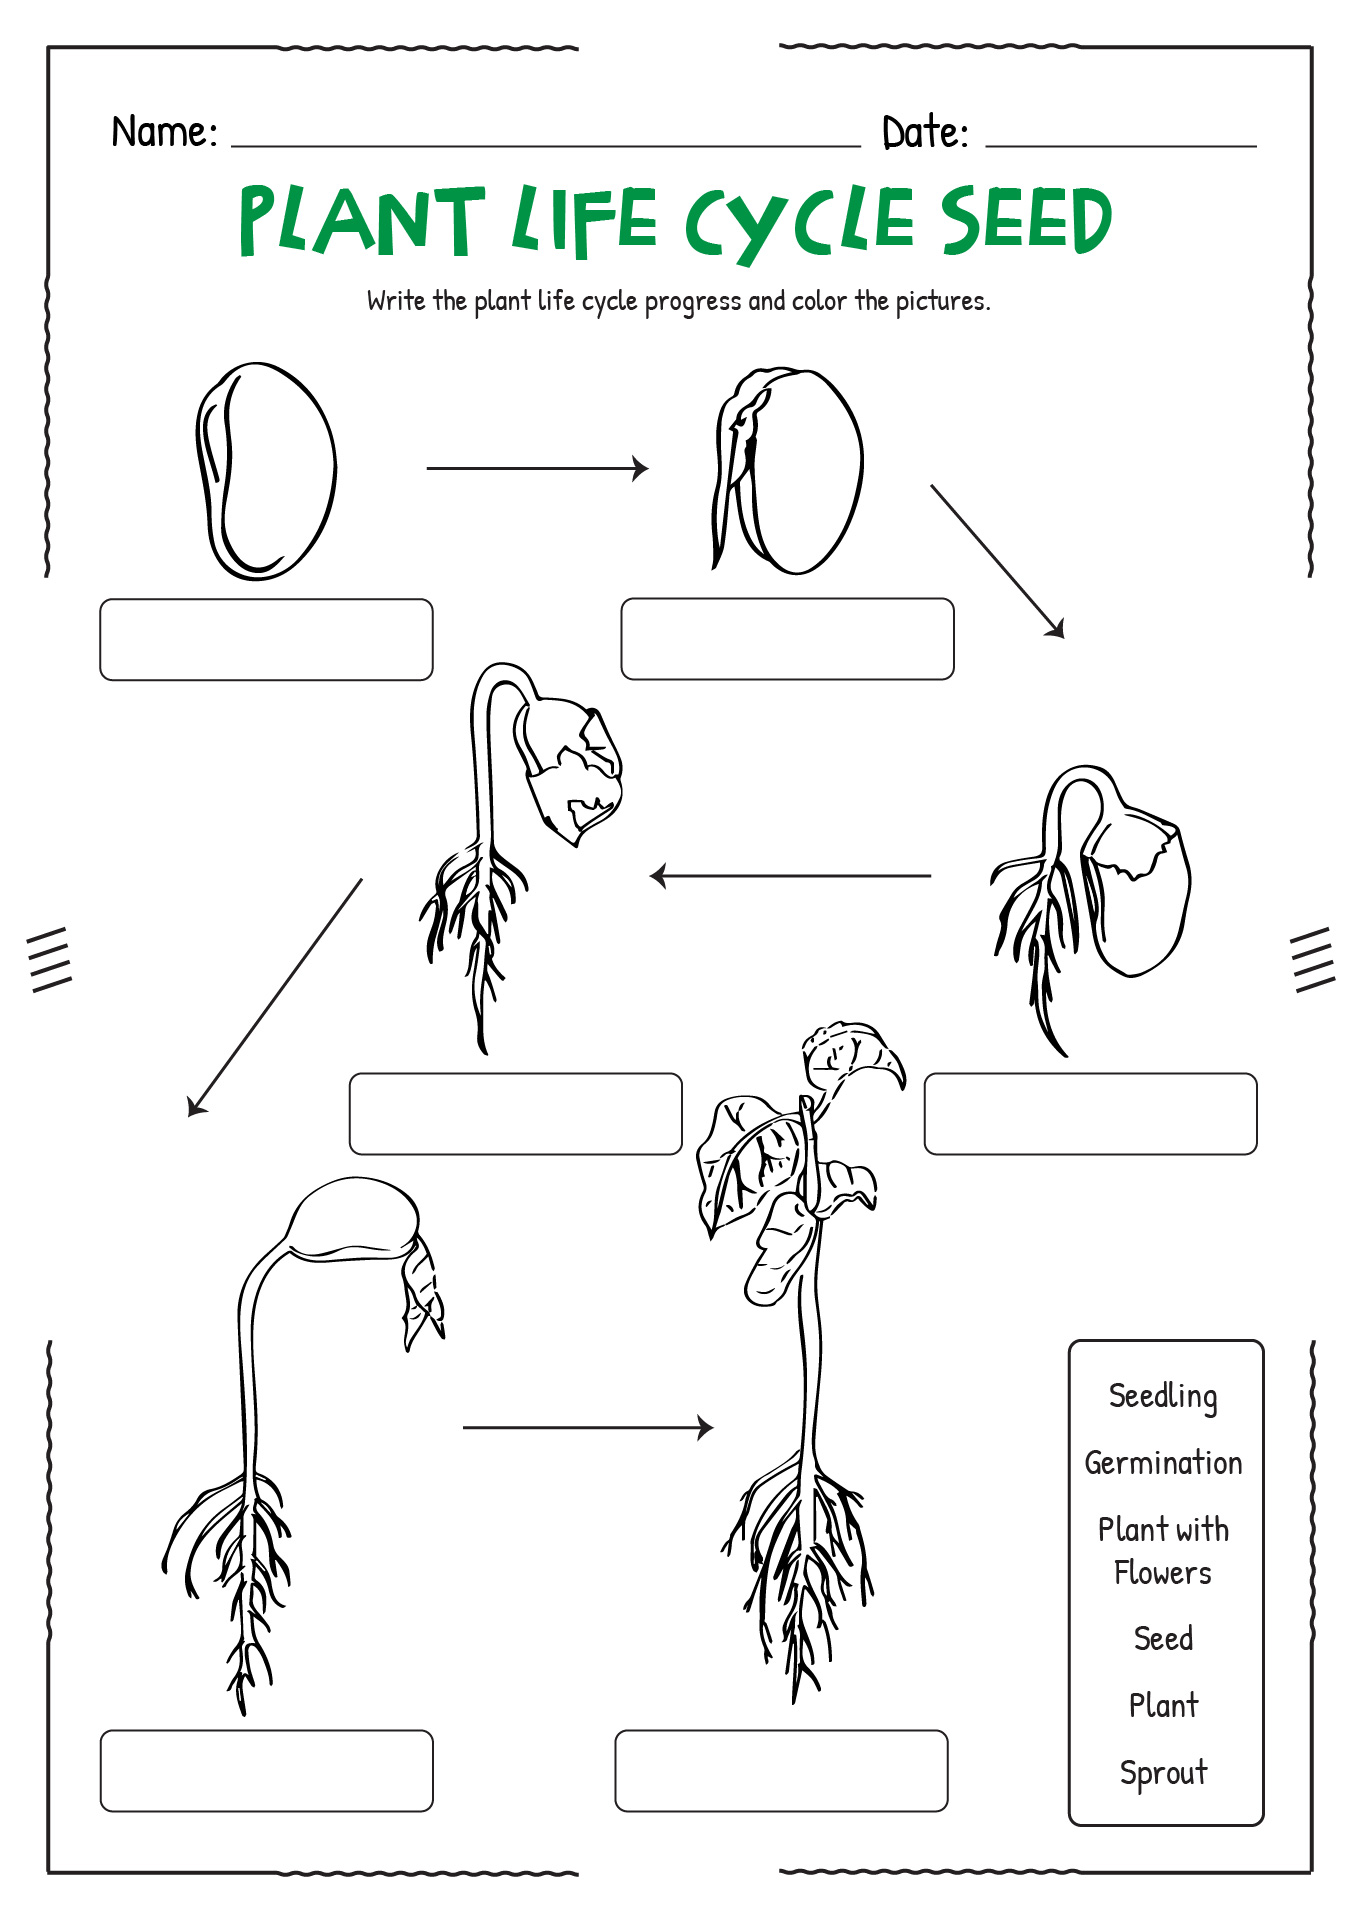 13 Best Images of Plant Life Cycle Worksheet Kindergarten - Plant Life